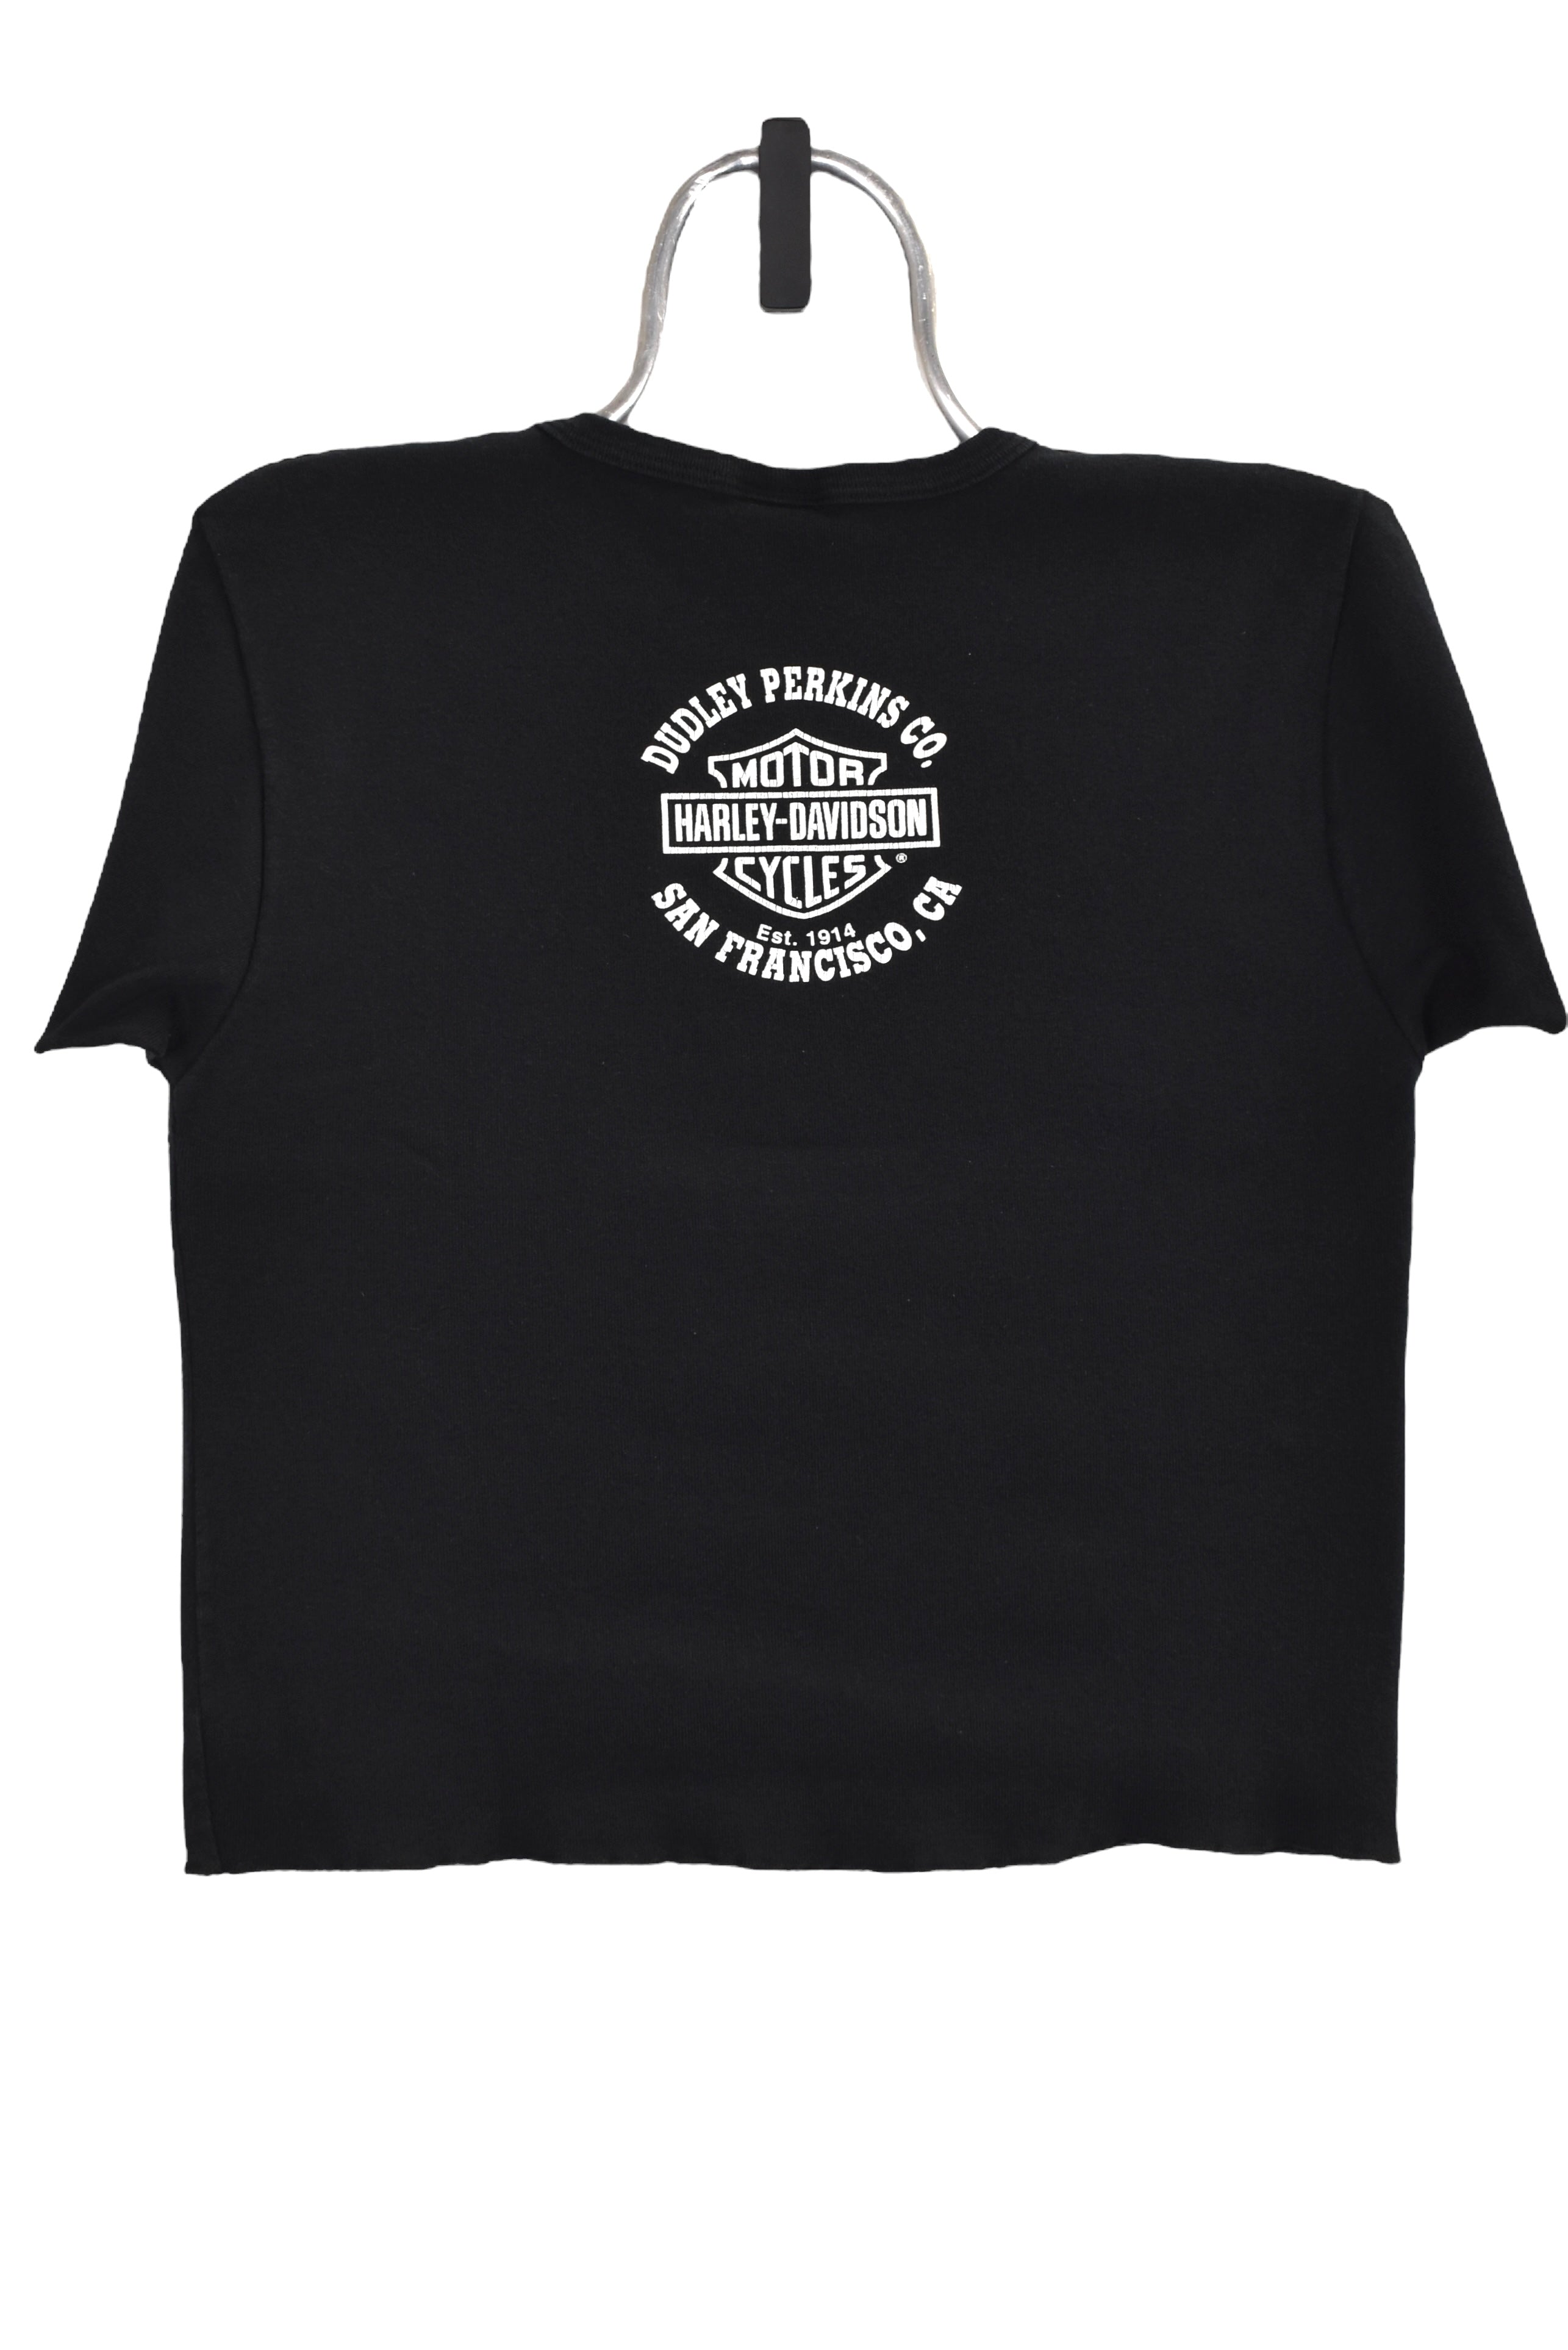 Women's vintage Harley Davidson shirt (M), black Y2K Tweety Bird graphic cropped tee